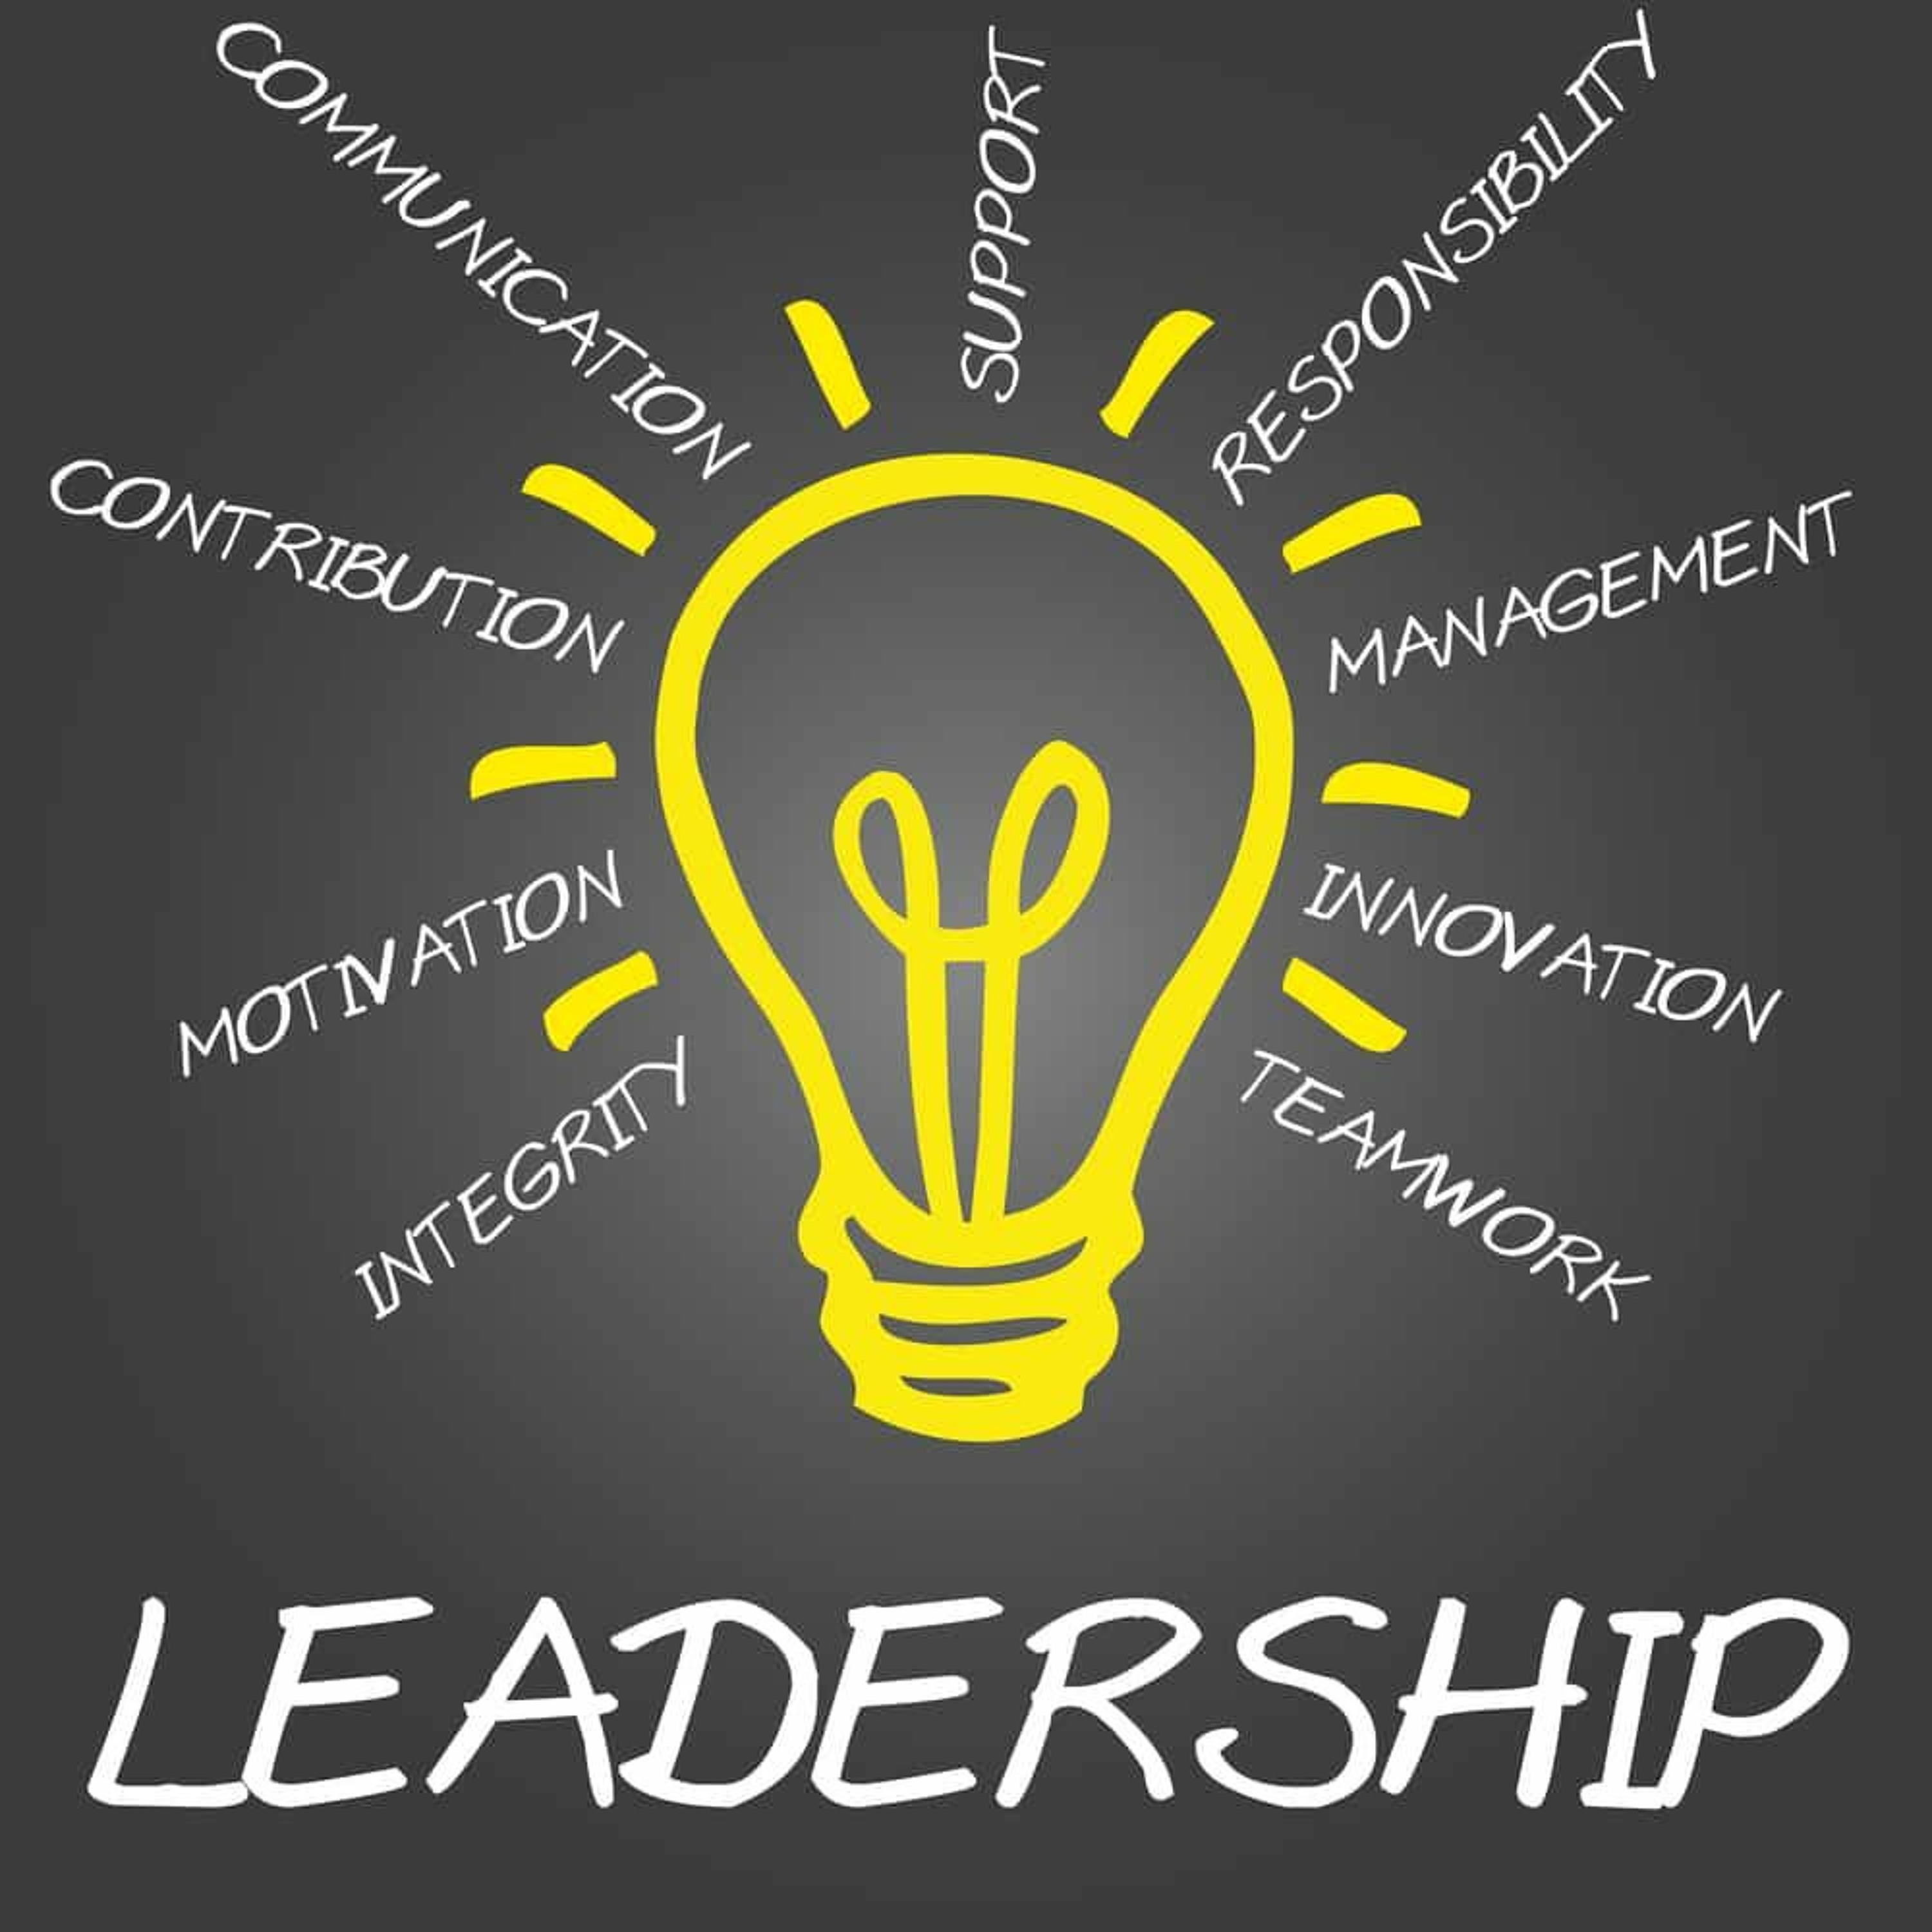 Leadership - Concepts of Effective Leadership